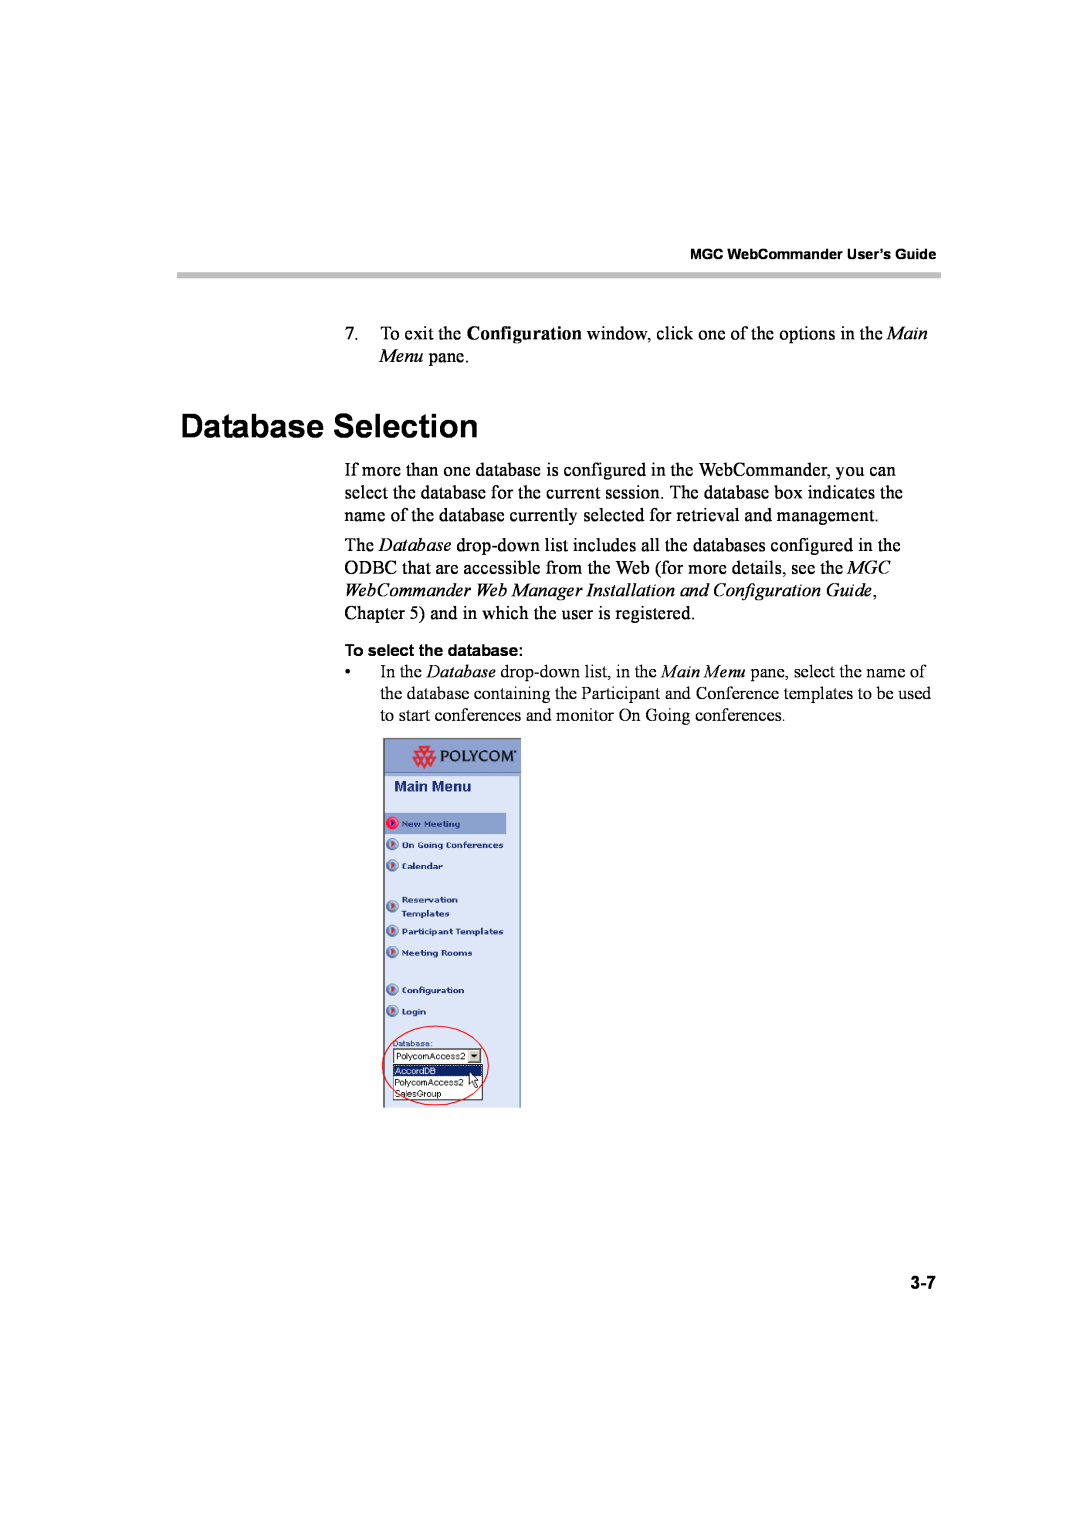 Polycom 8 manual Database Selection, To select the database 